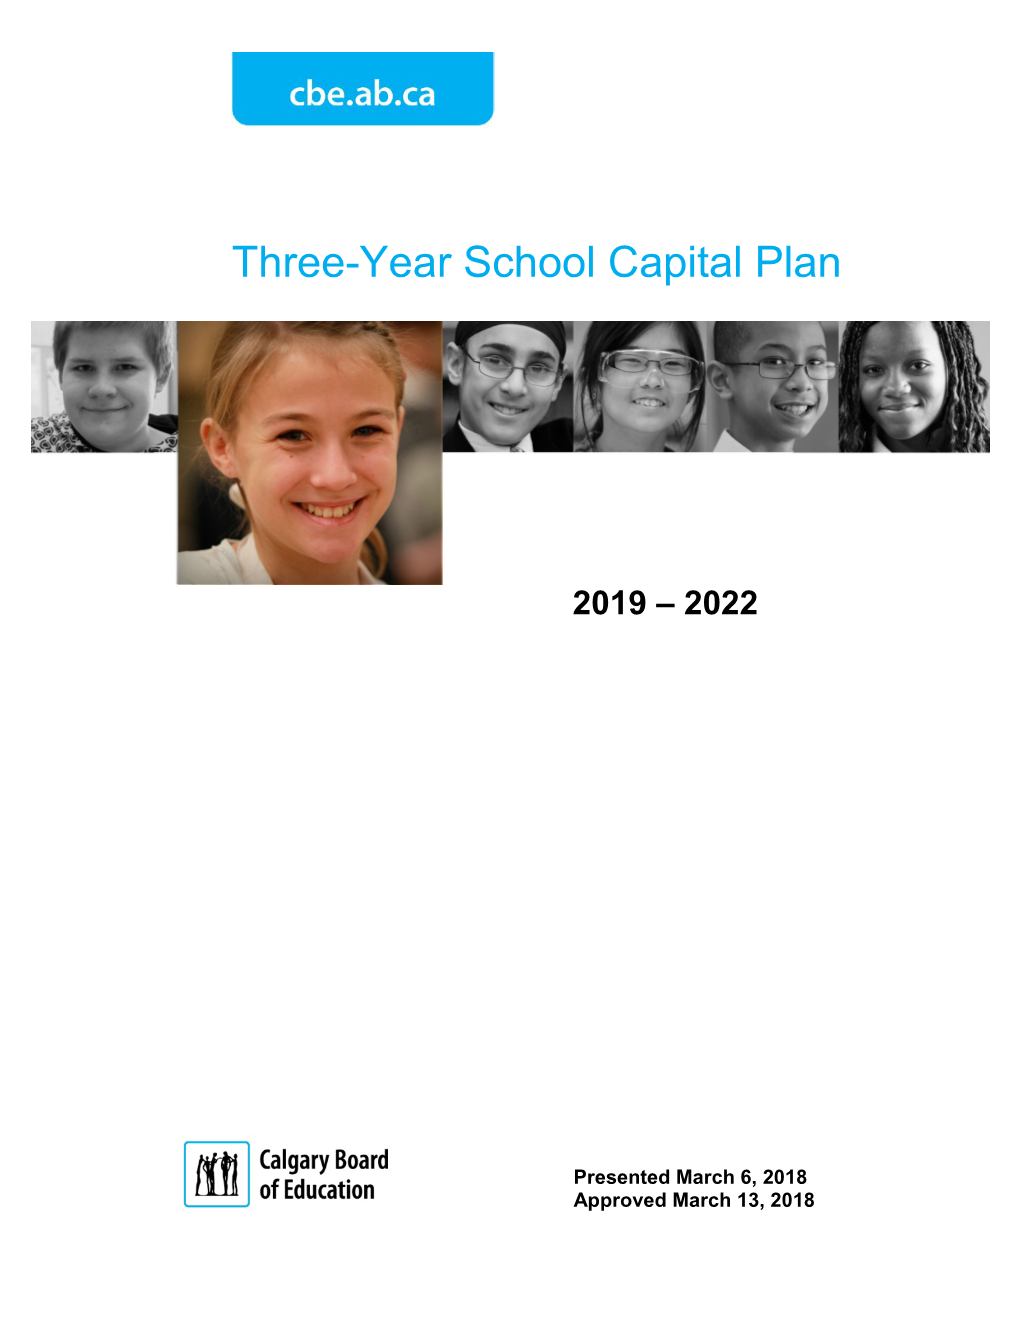 Three-Year School Capital Plan 2019-2022 - Summary